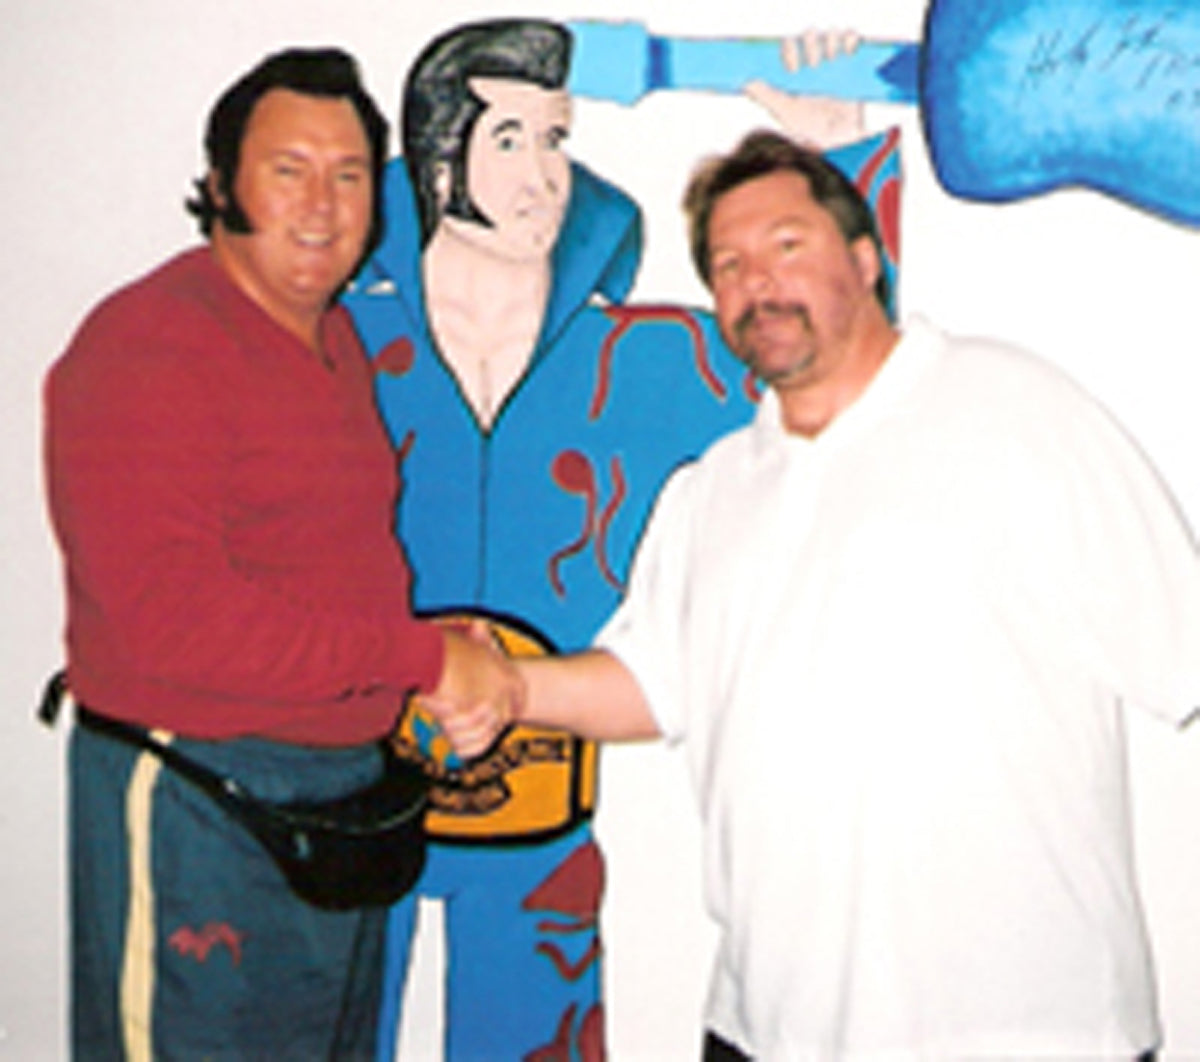 BD260  Honky Tonk Man  Ronnie Garvin  VERY RARE Autographed Vintage Wrestling Magazine  w/COA